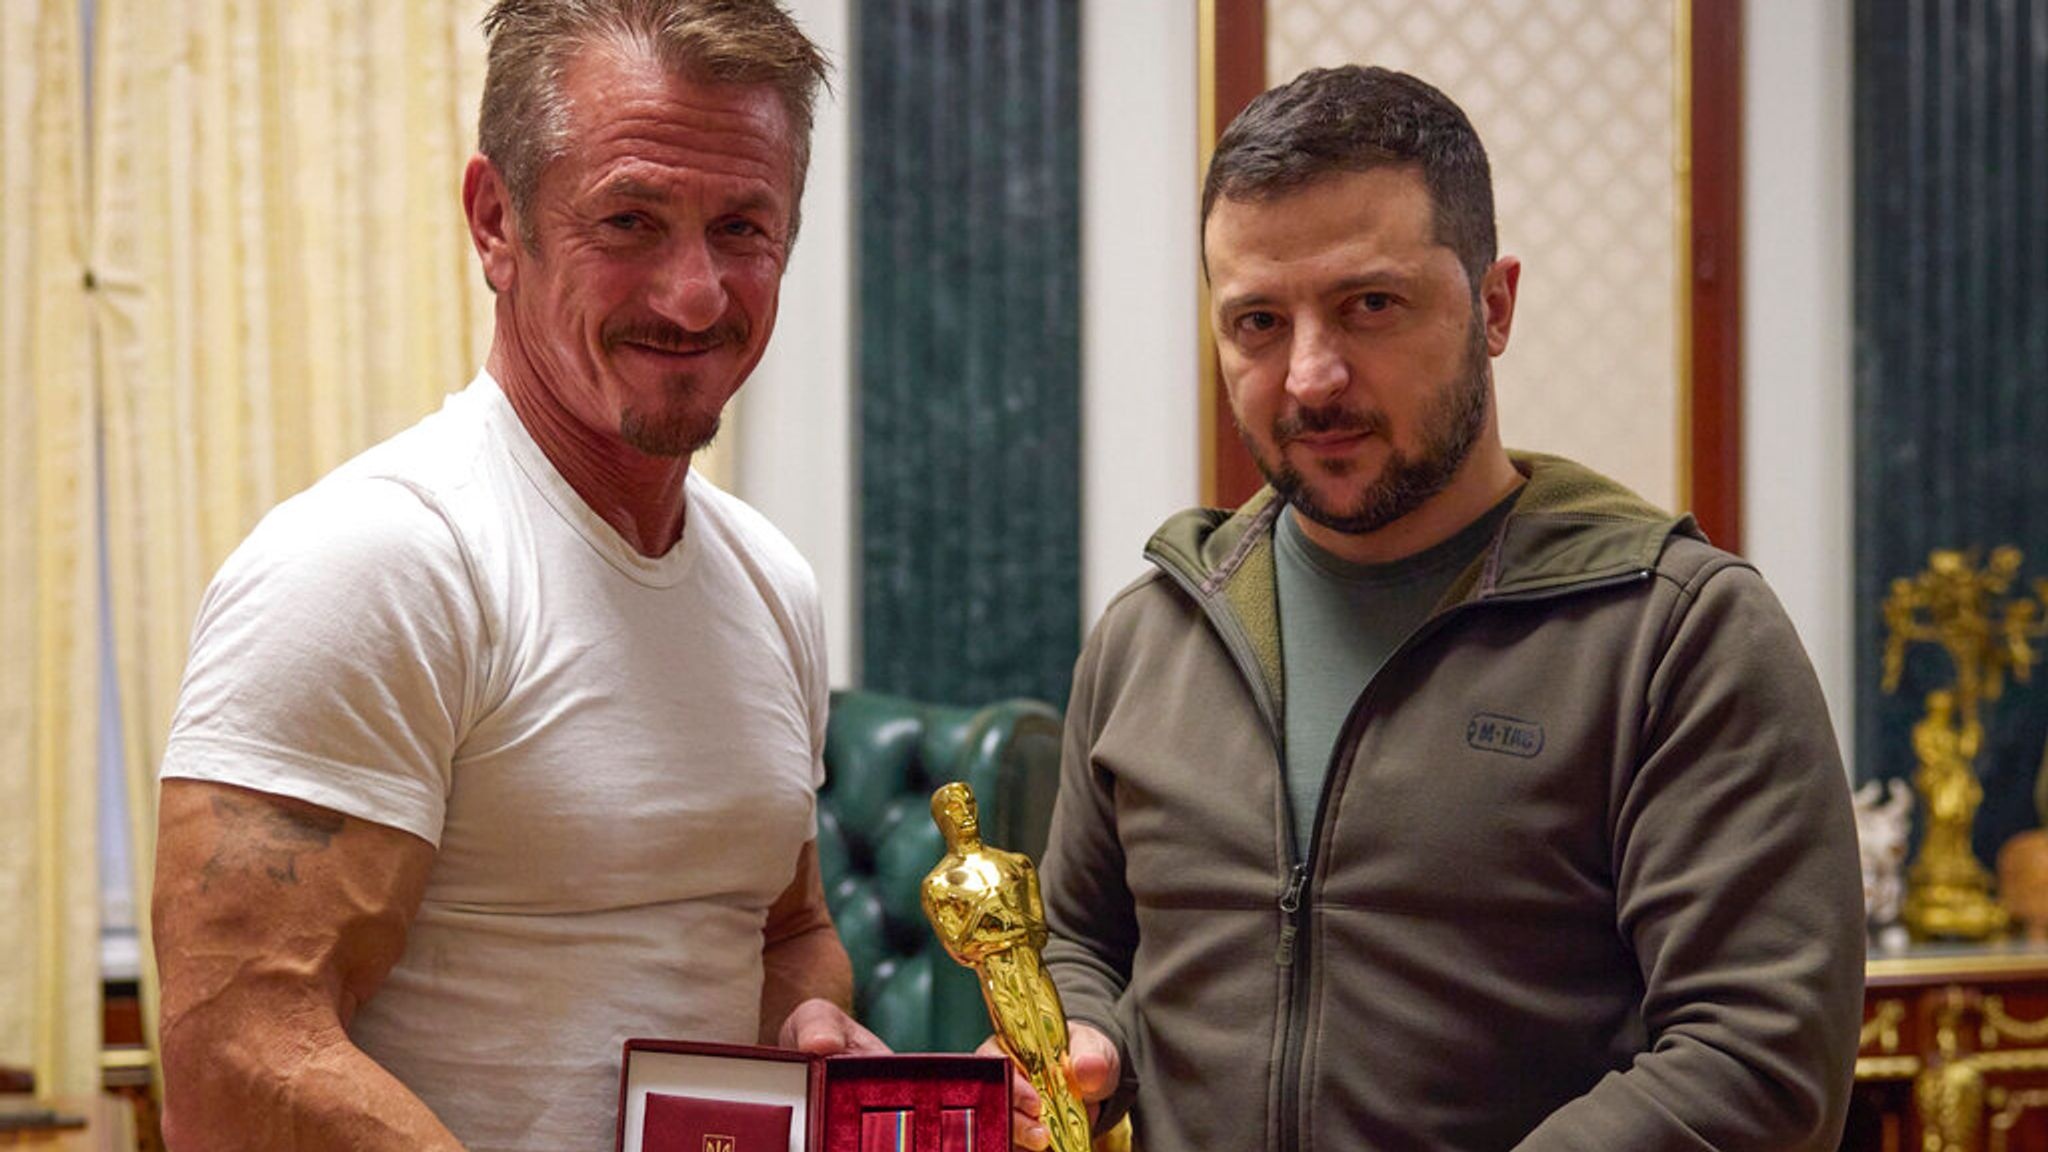 Sean Penn Gives His Oscar to Zelensky During Kyiv Visit